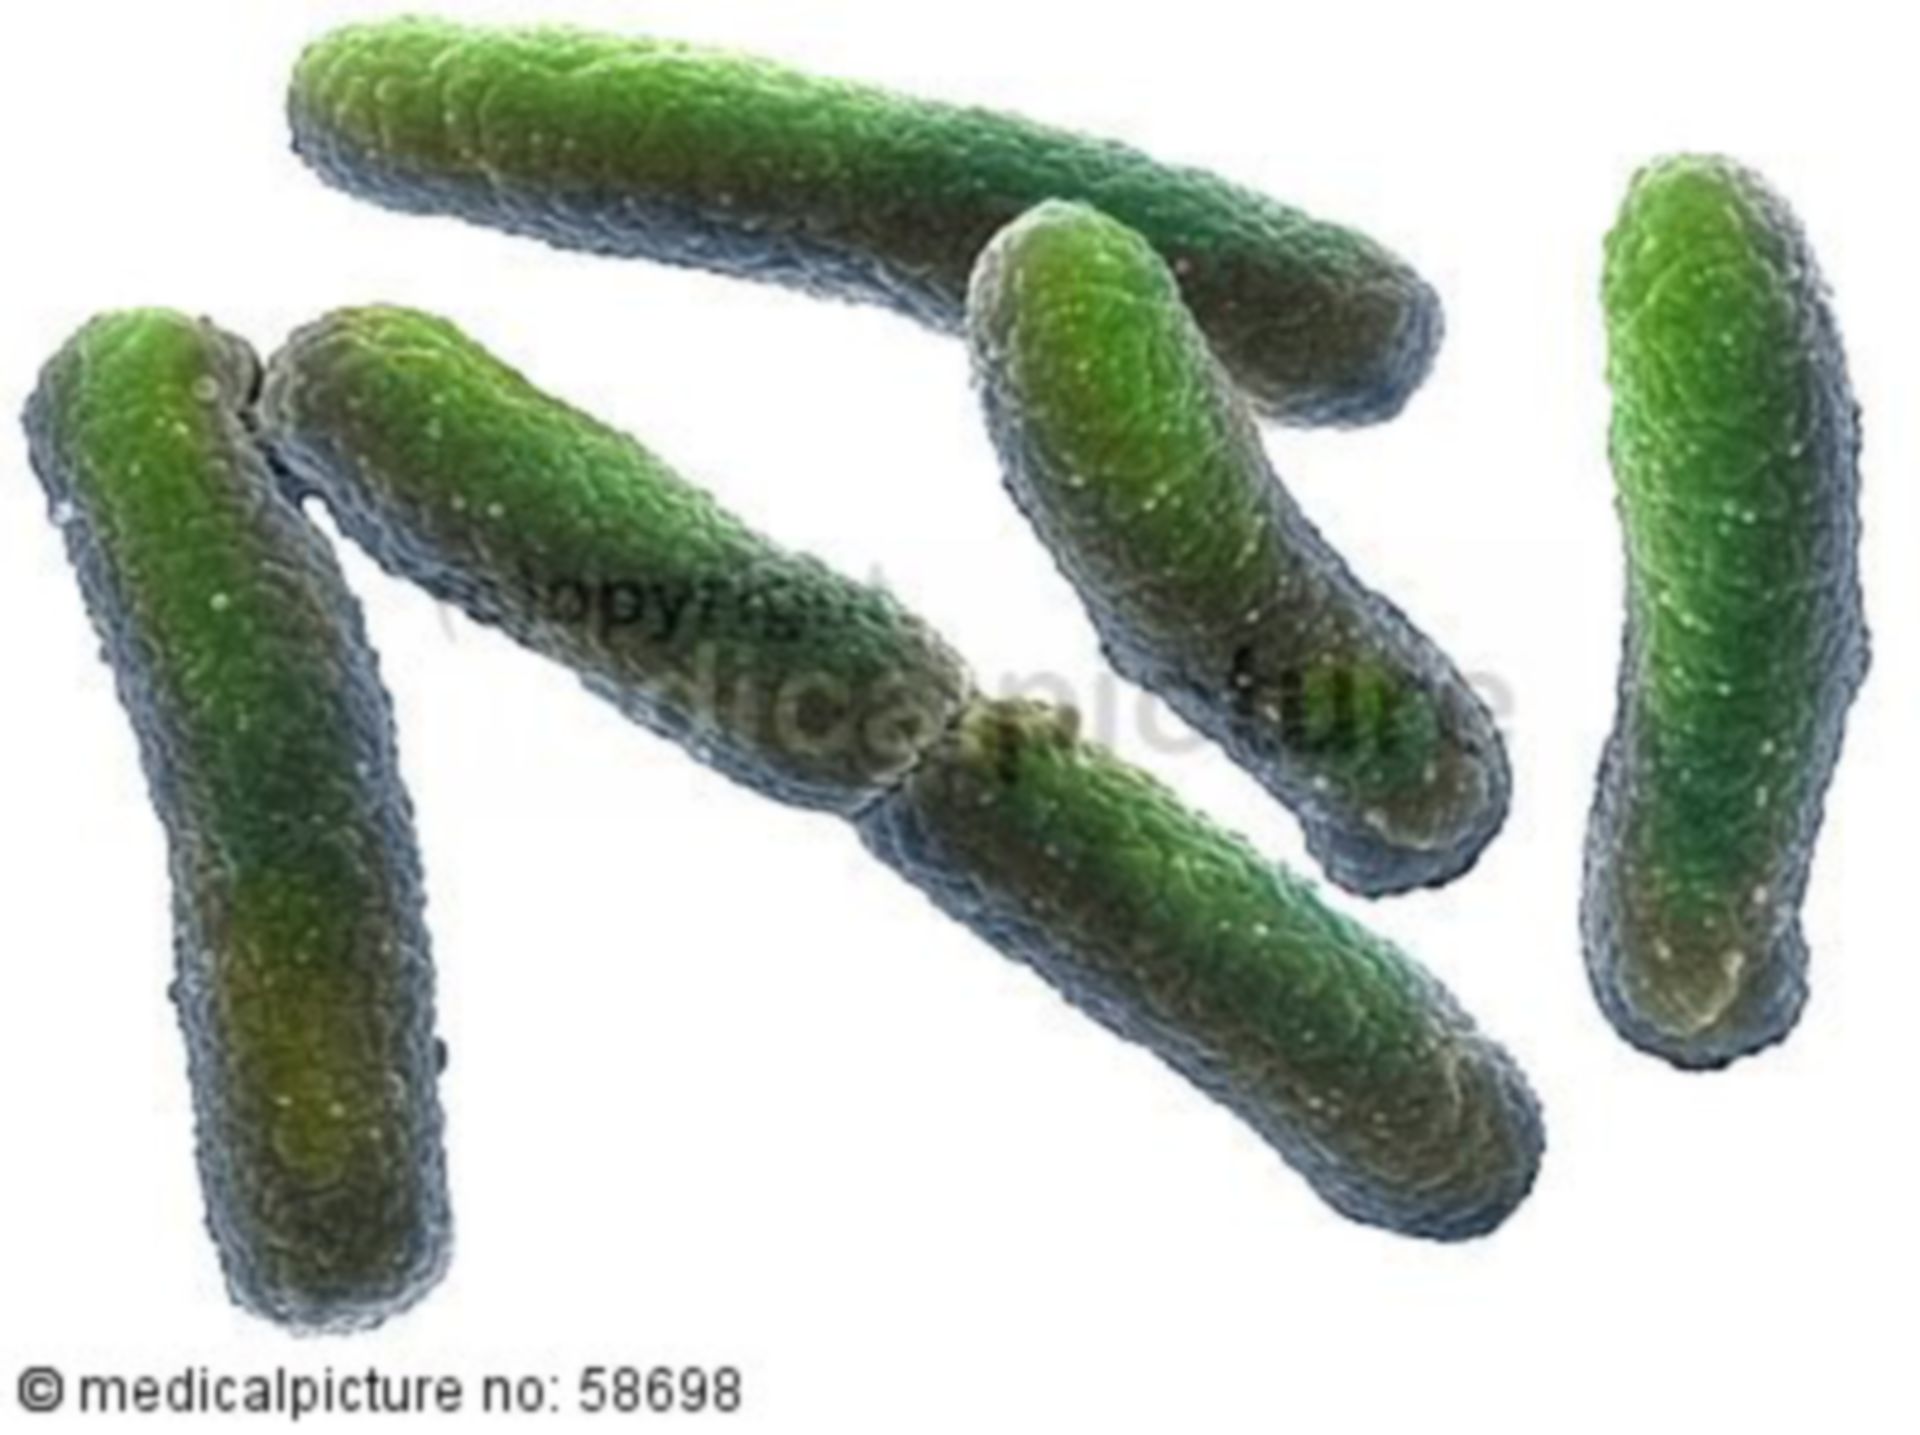 NDM 1 bacterium